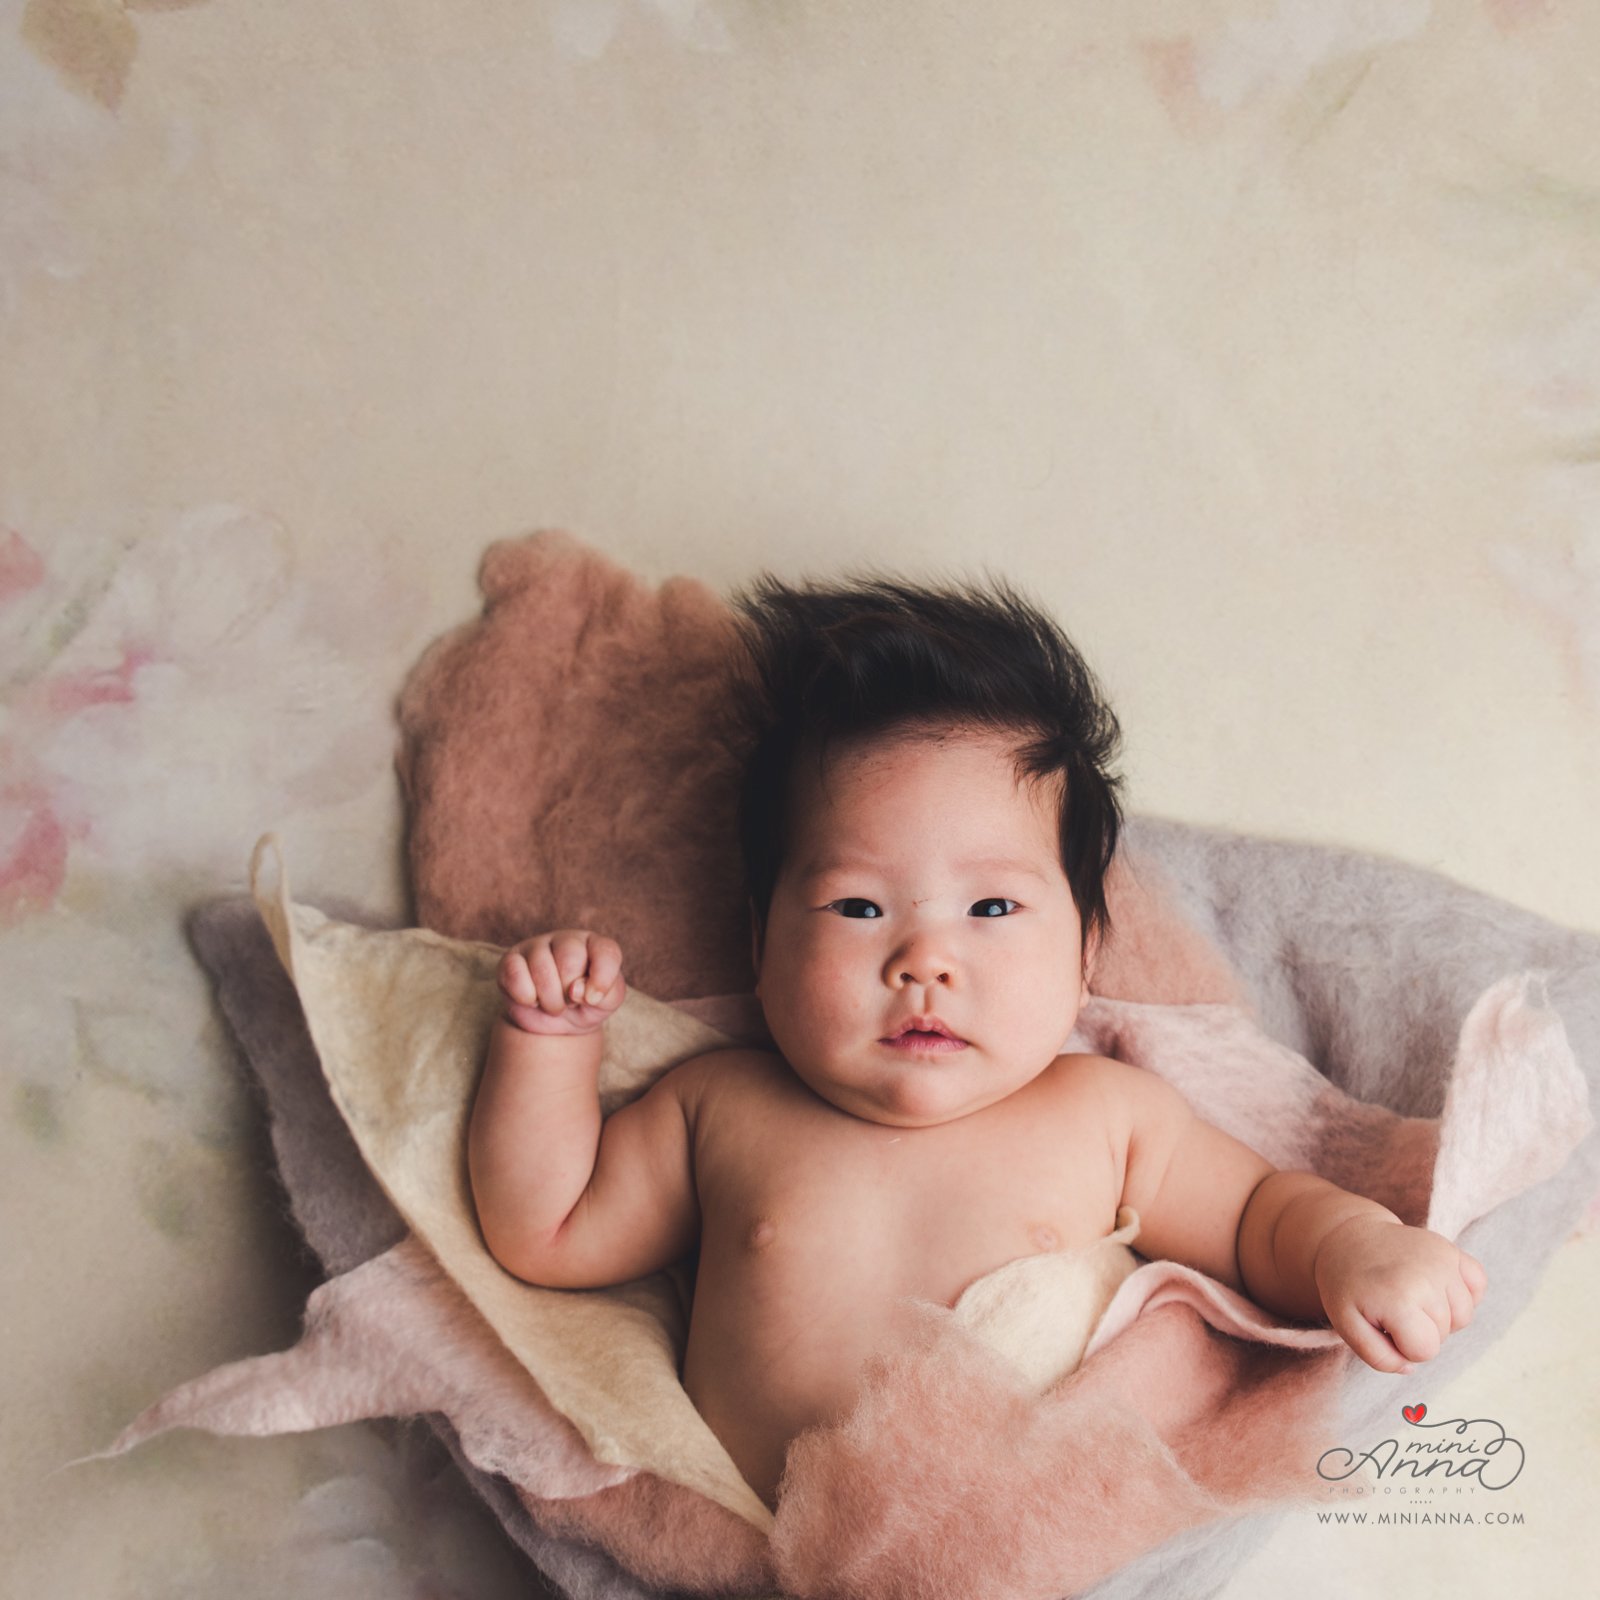 Asian baby girl portrait